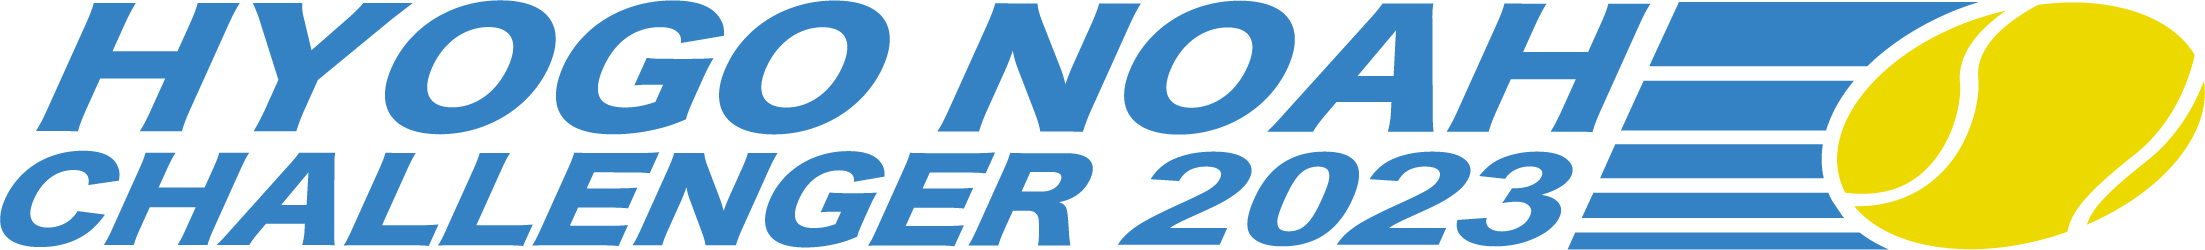 2023 Hyogo NOAH Challenger